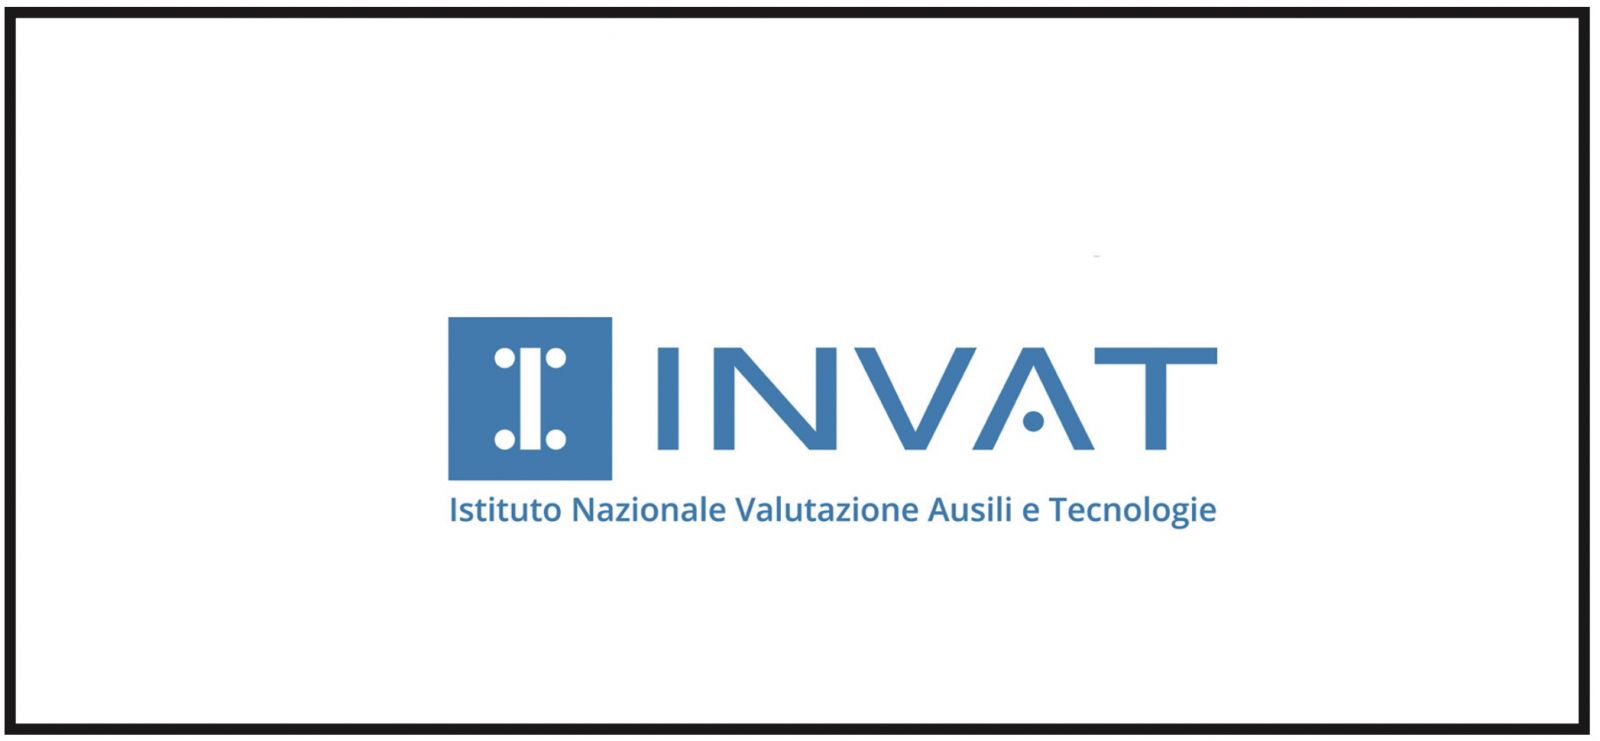 INVAT's logo